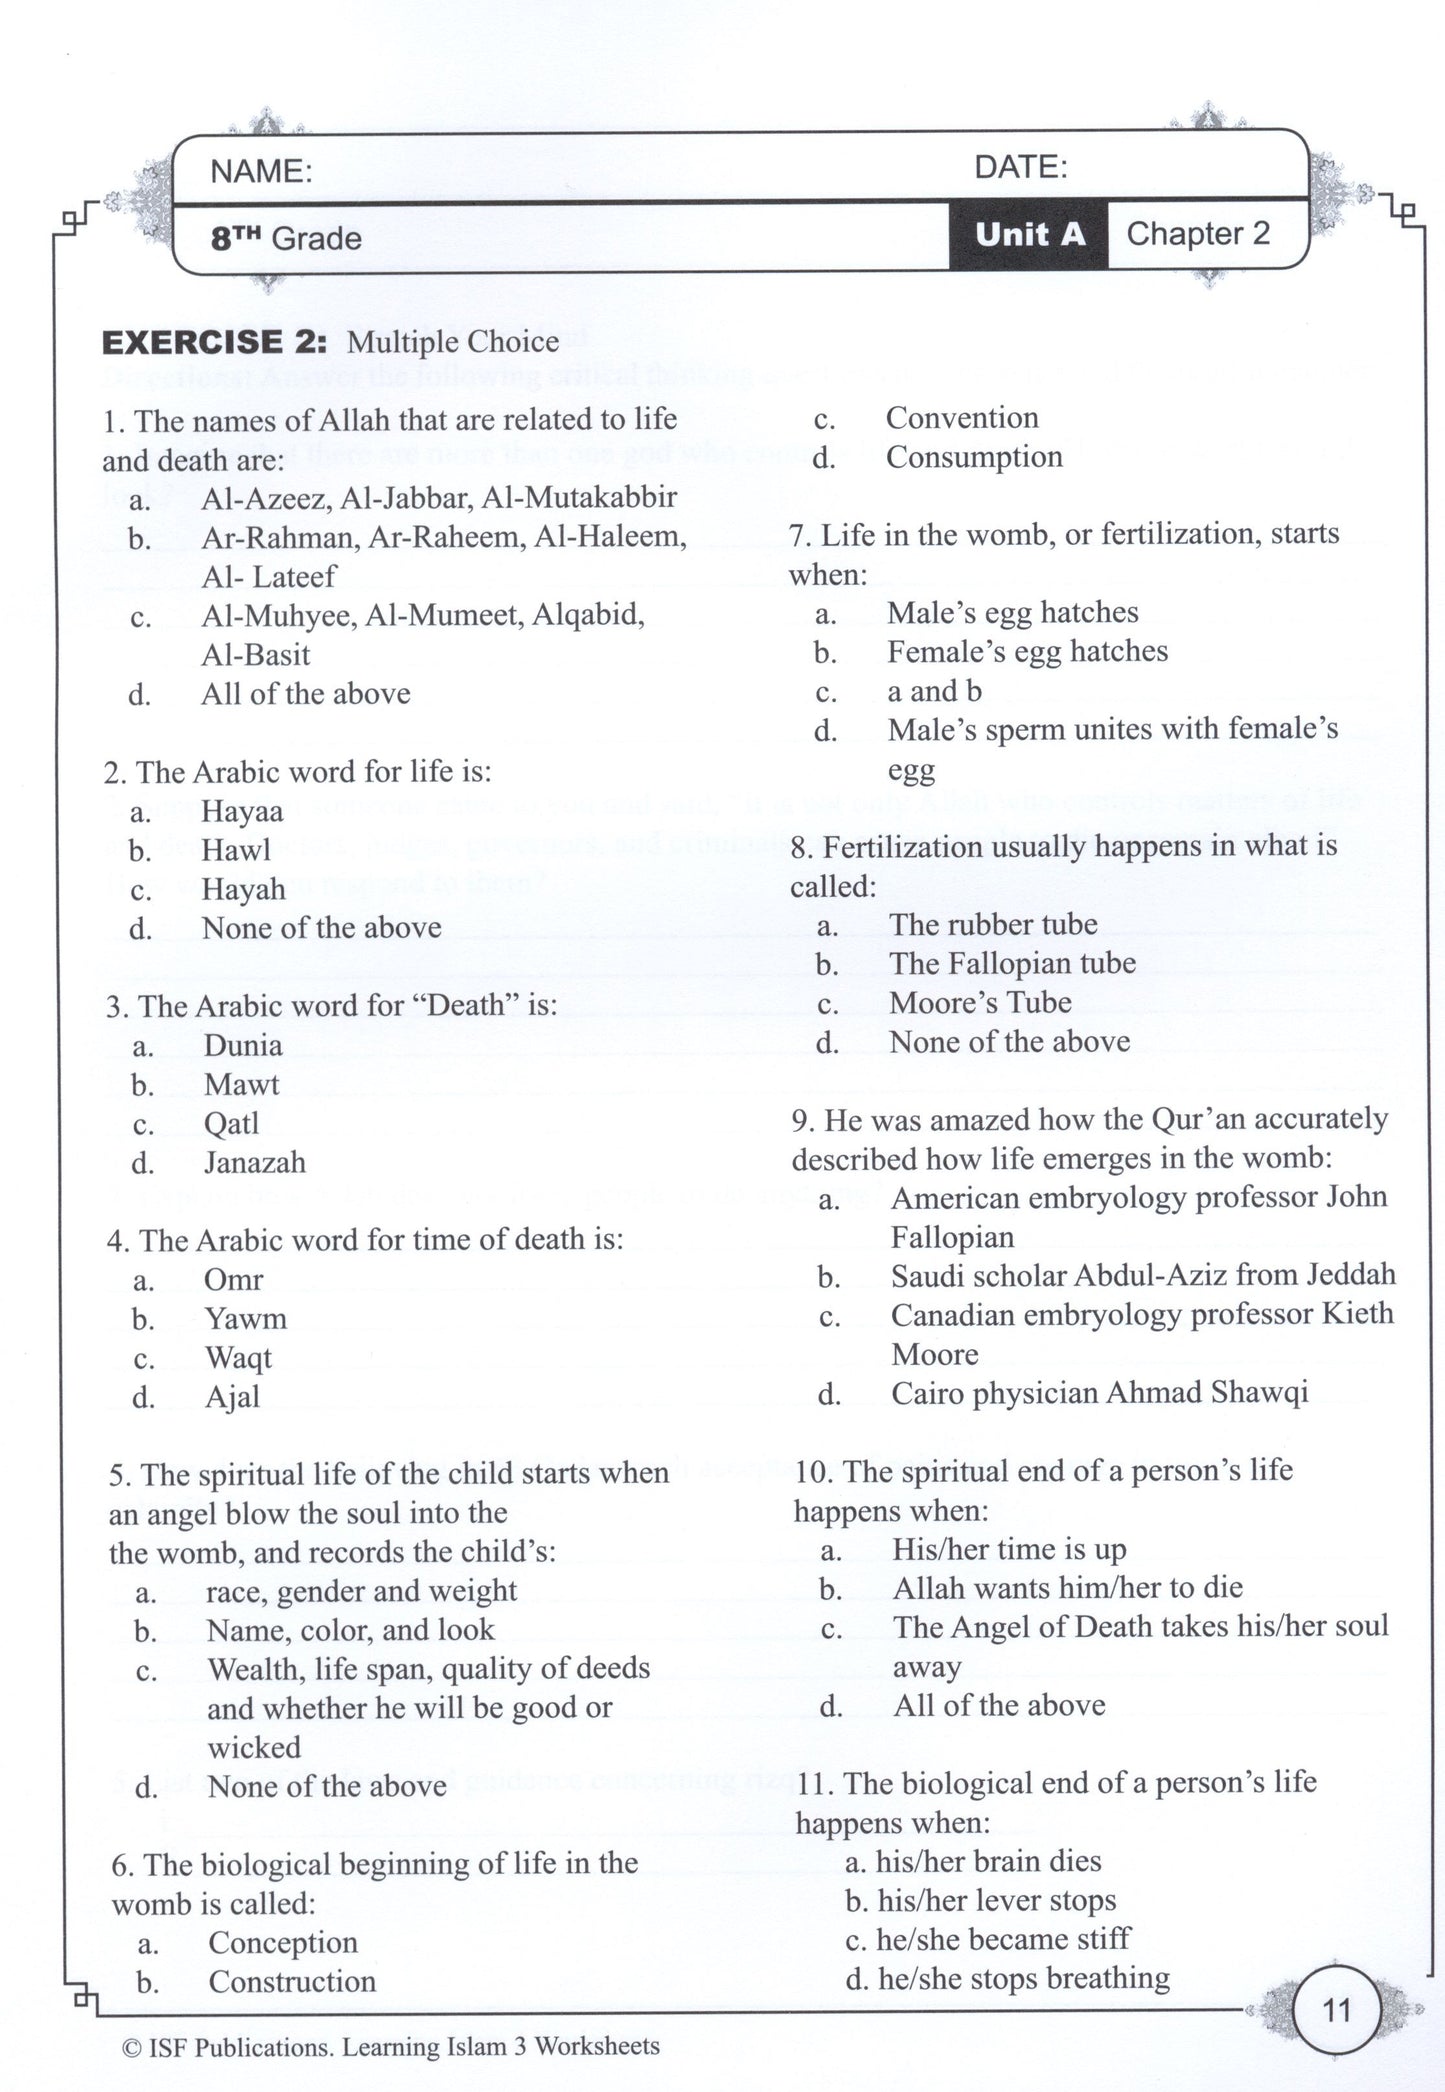 Learning Islam Workbook Level 3 (Grade 8)